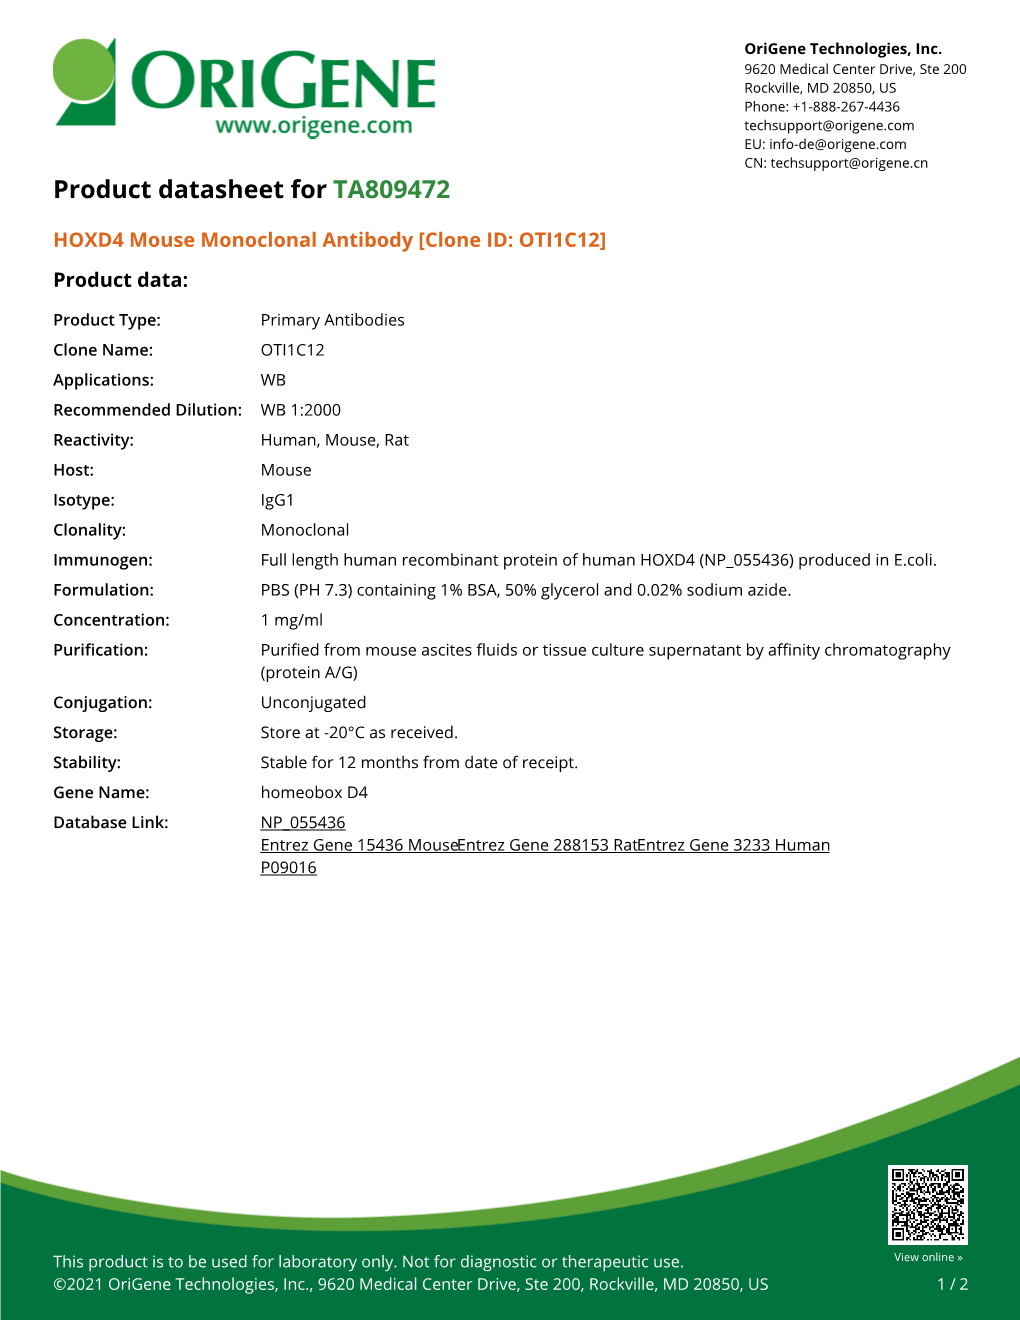 HOXD4 Mouse Monoclonal Antibody [Clone ID: OTI1C12] Product Data